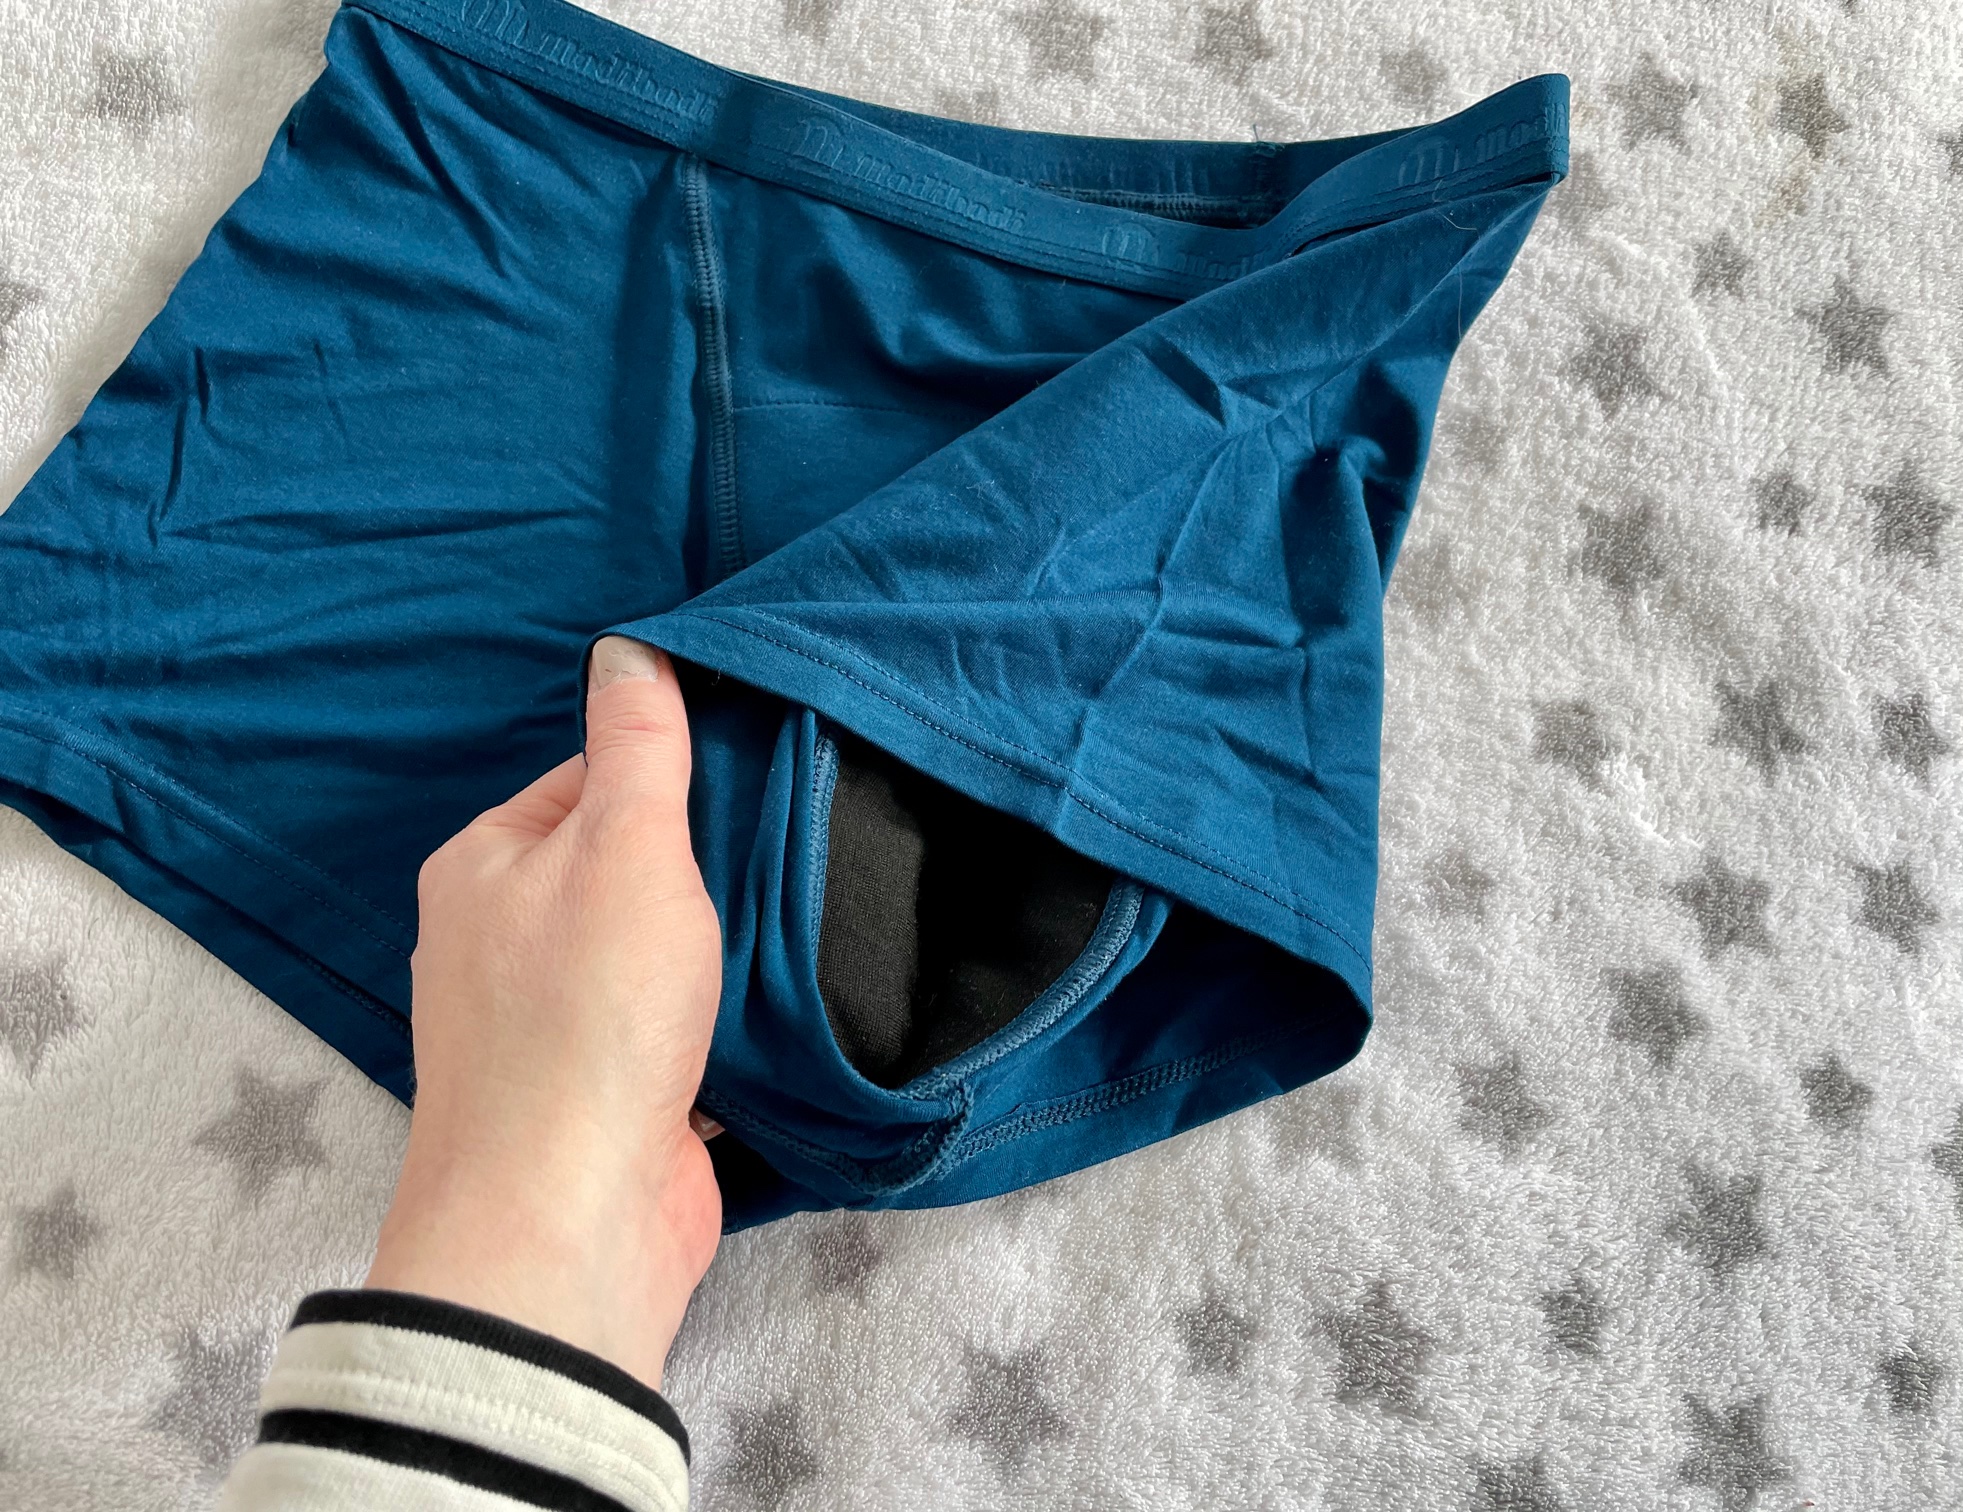 Modibodi Period Pants Review – We Tried Reusable Period Underwear - A ...